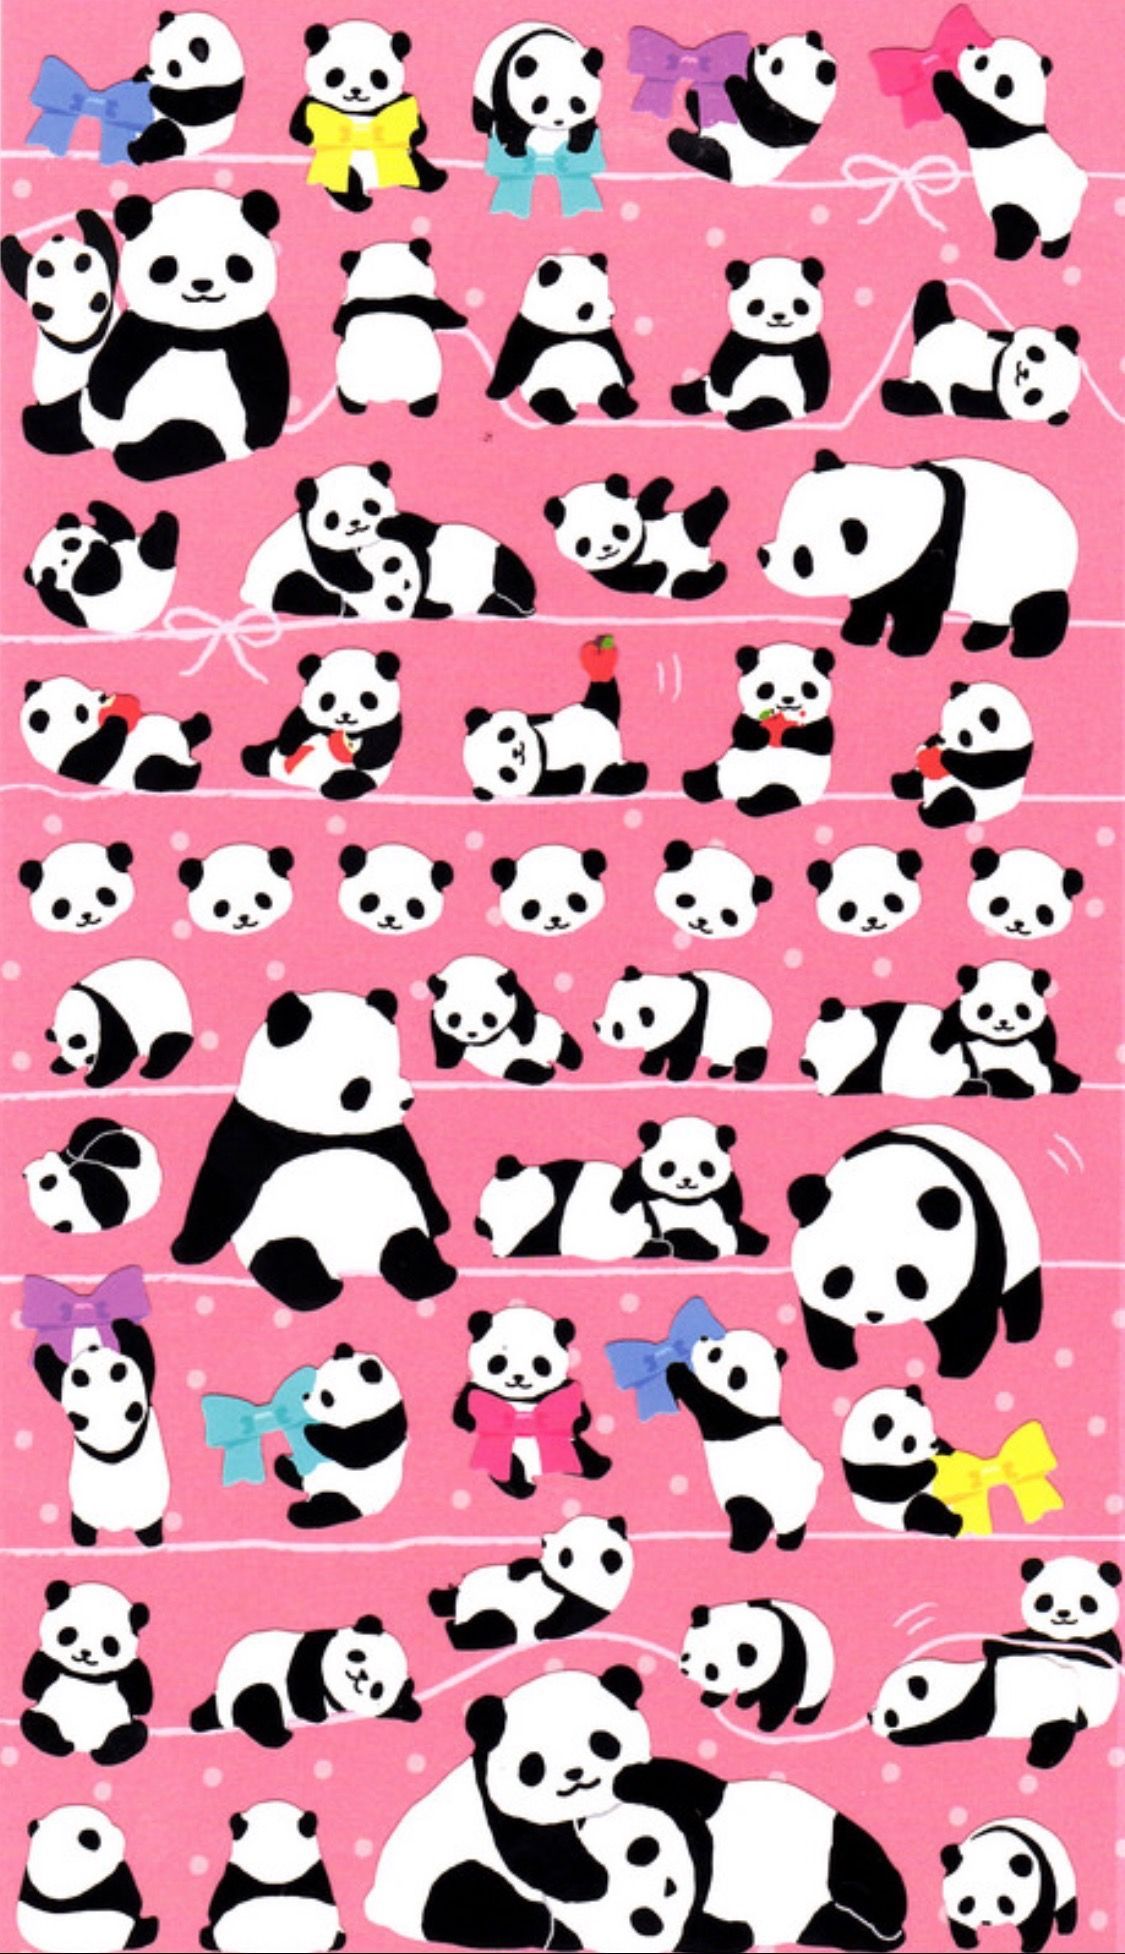 Cute PandasWallpapers